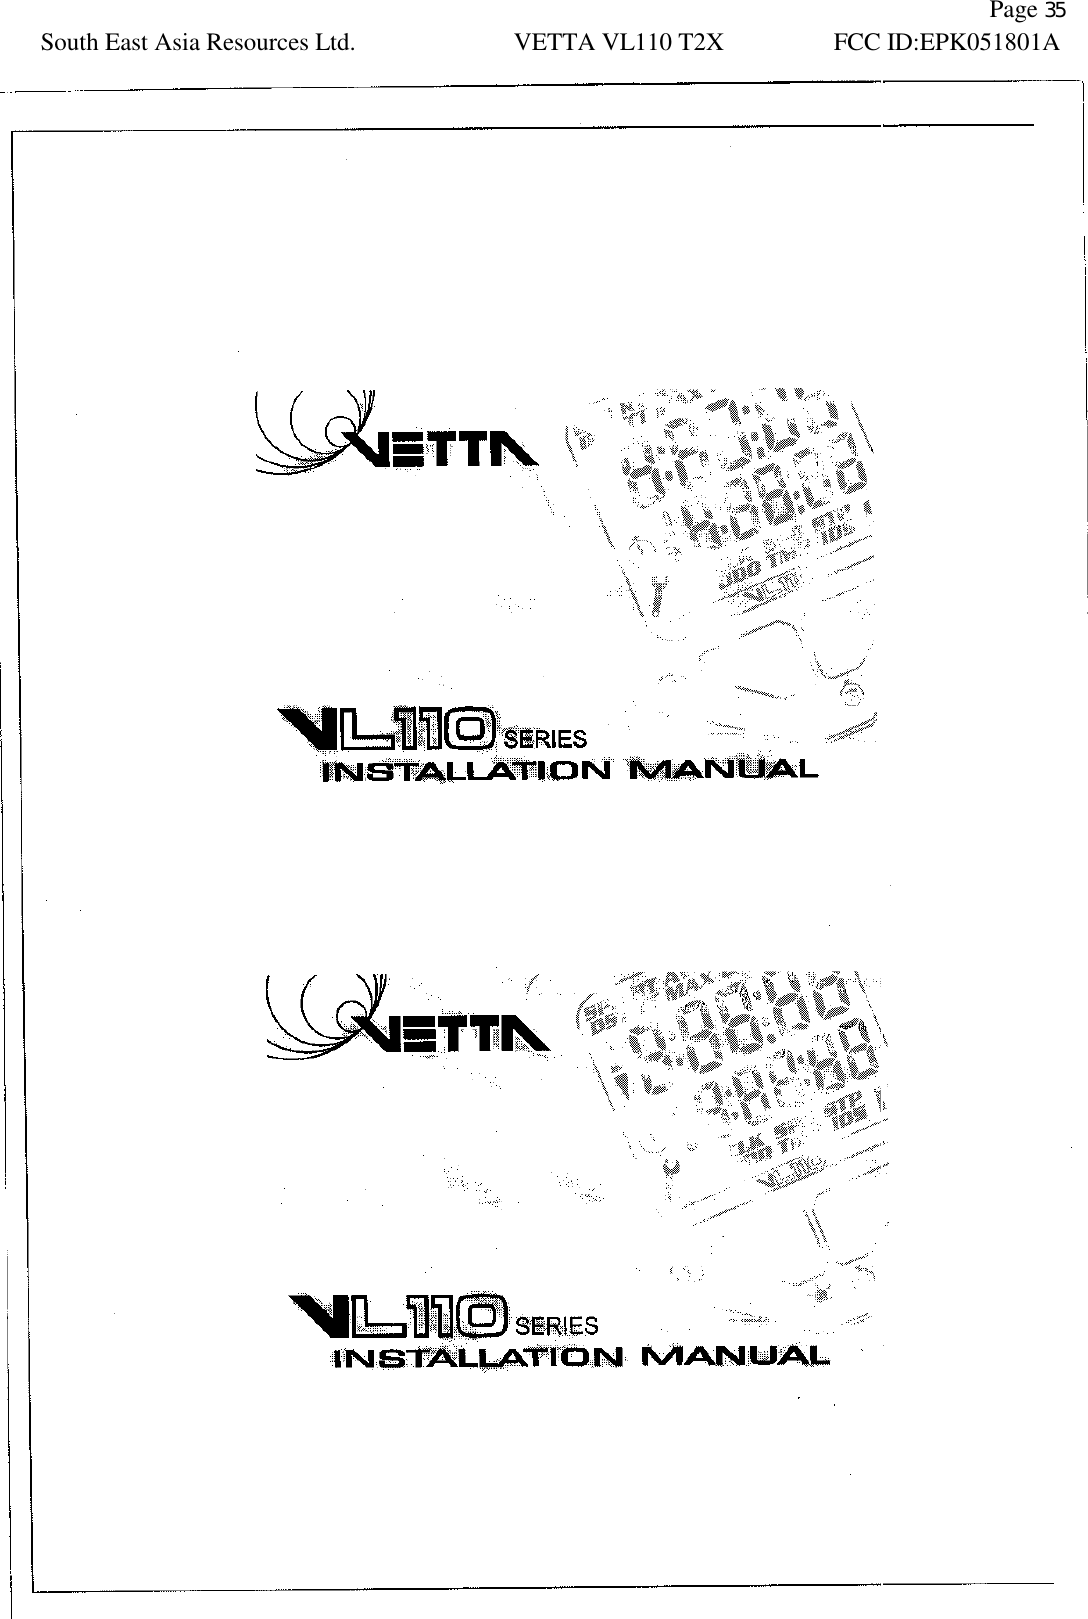               Page 35 South East Asia Resources Ltd. VETTA VL110 T2X FCC ID:EPK051801A   